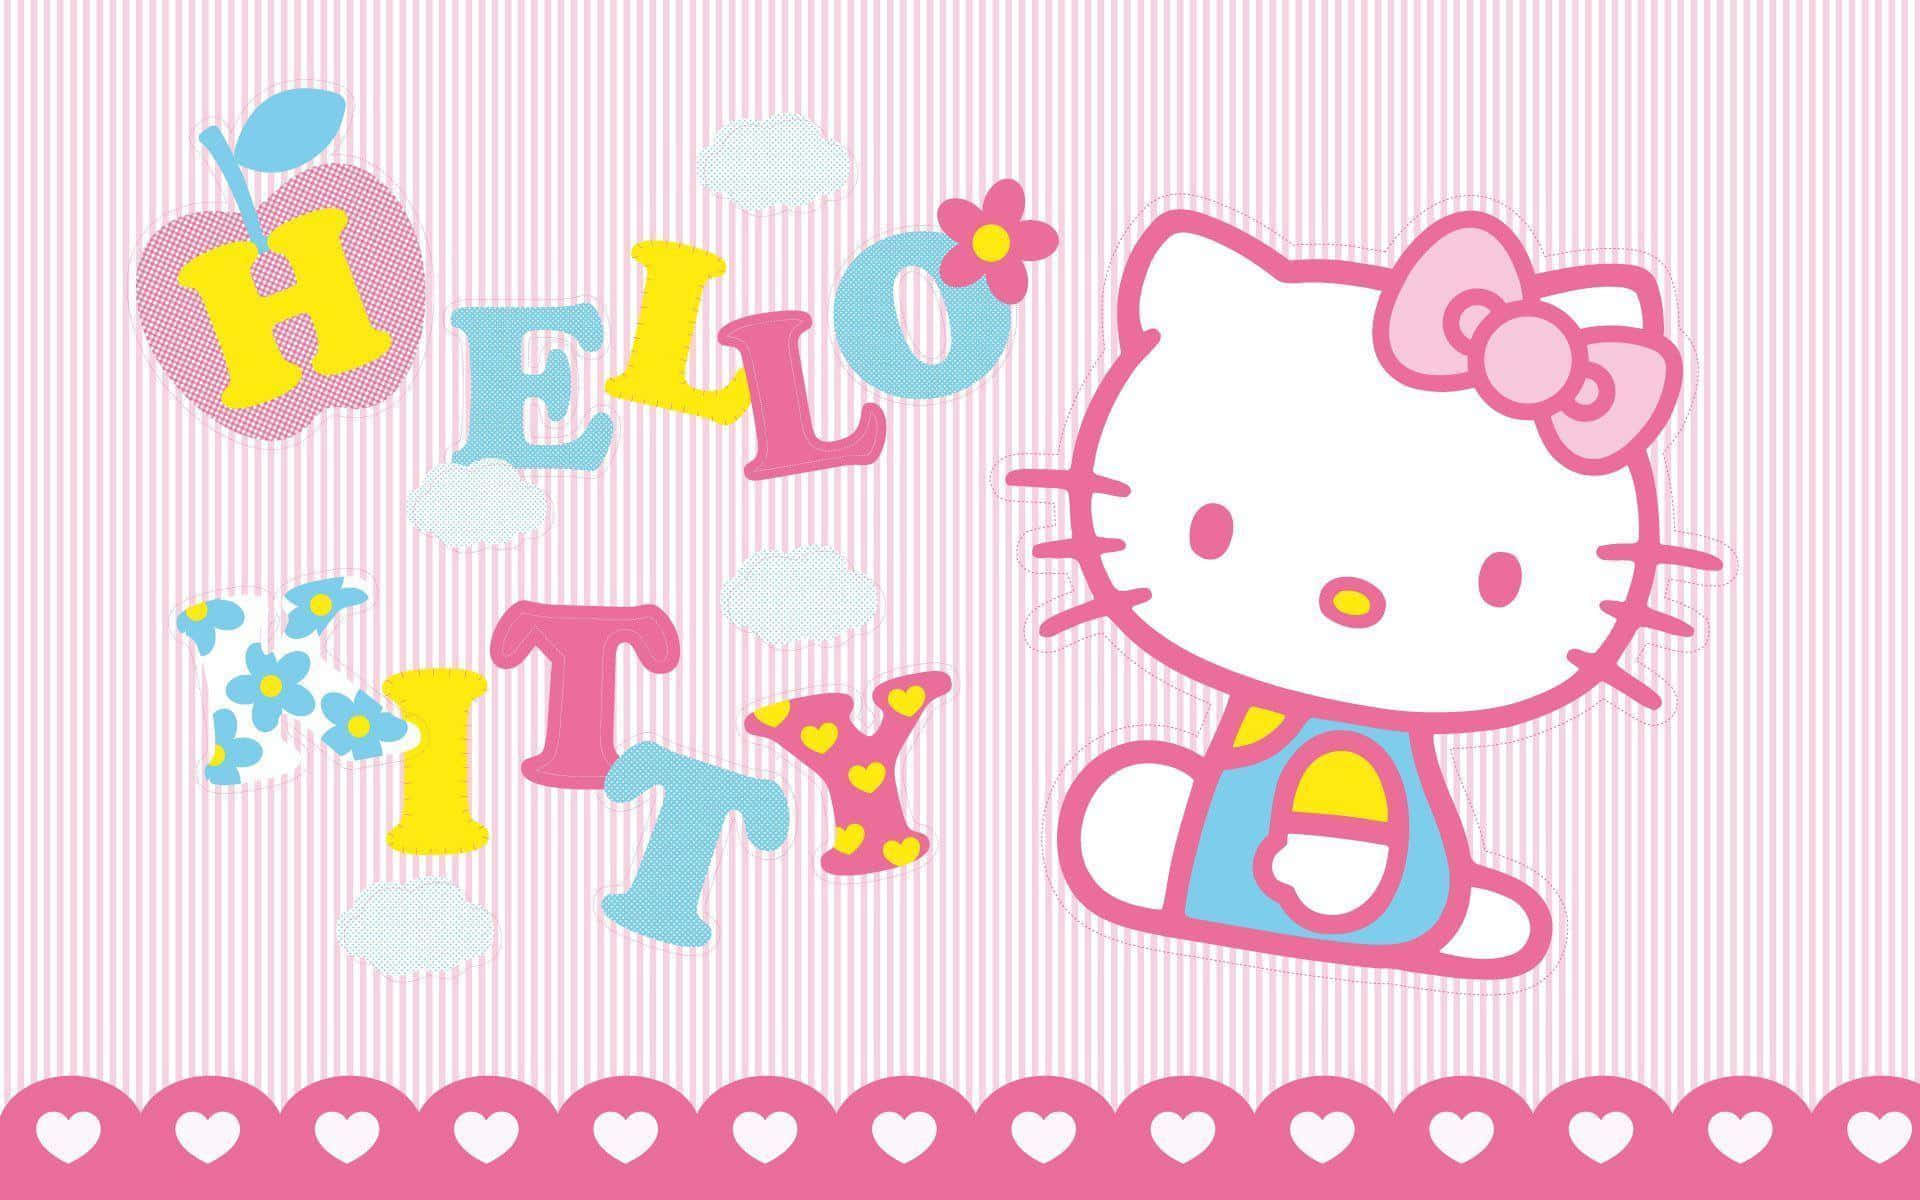 Sfondidi Hello Kitty - Sfondi Per Ragazze Sfondo